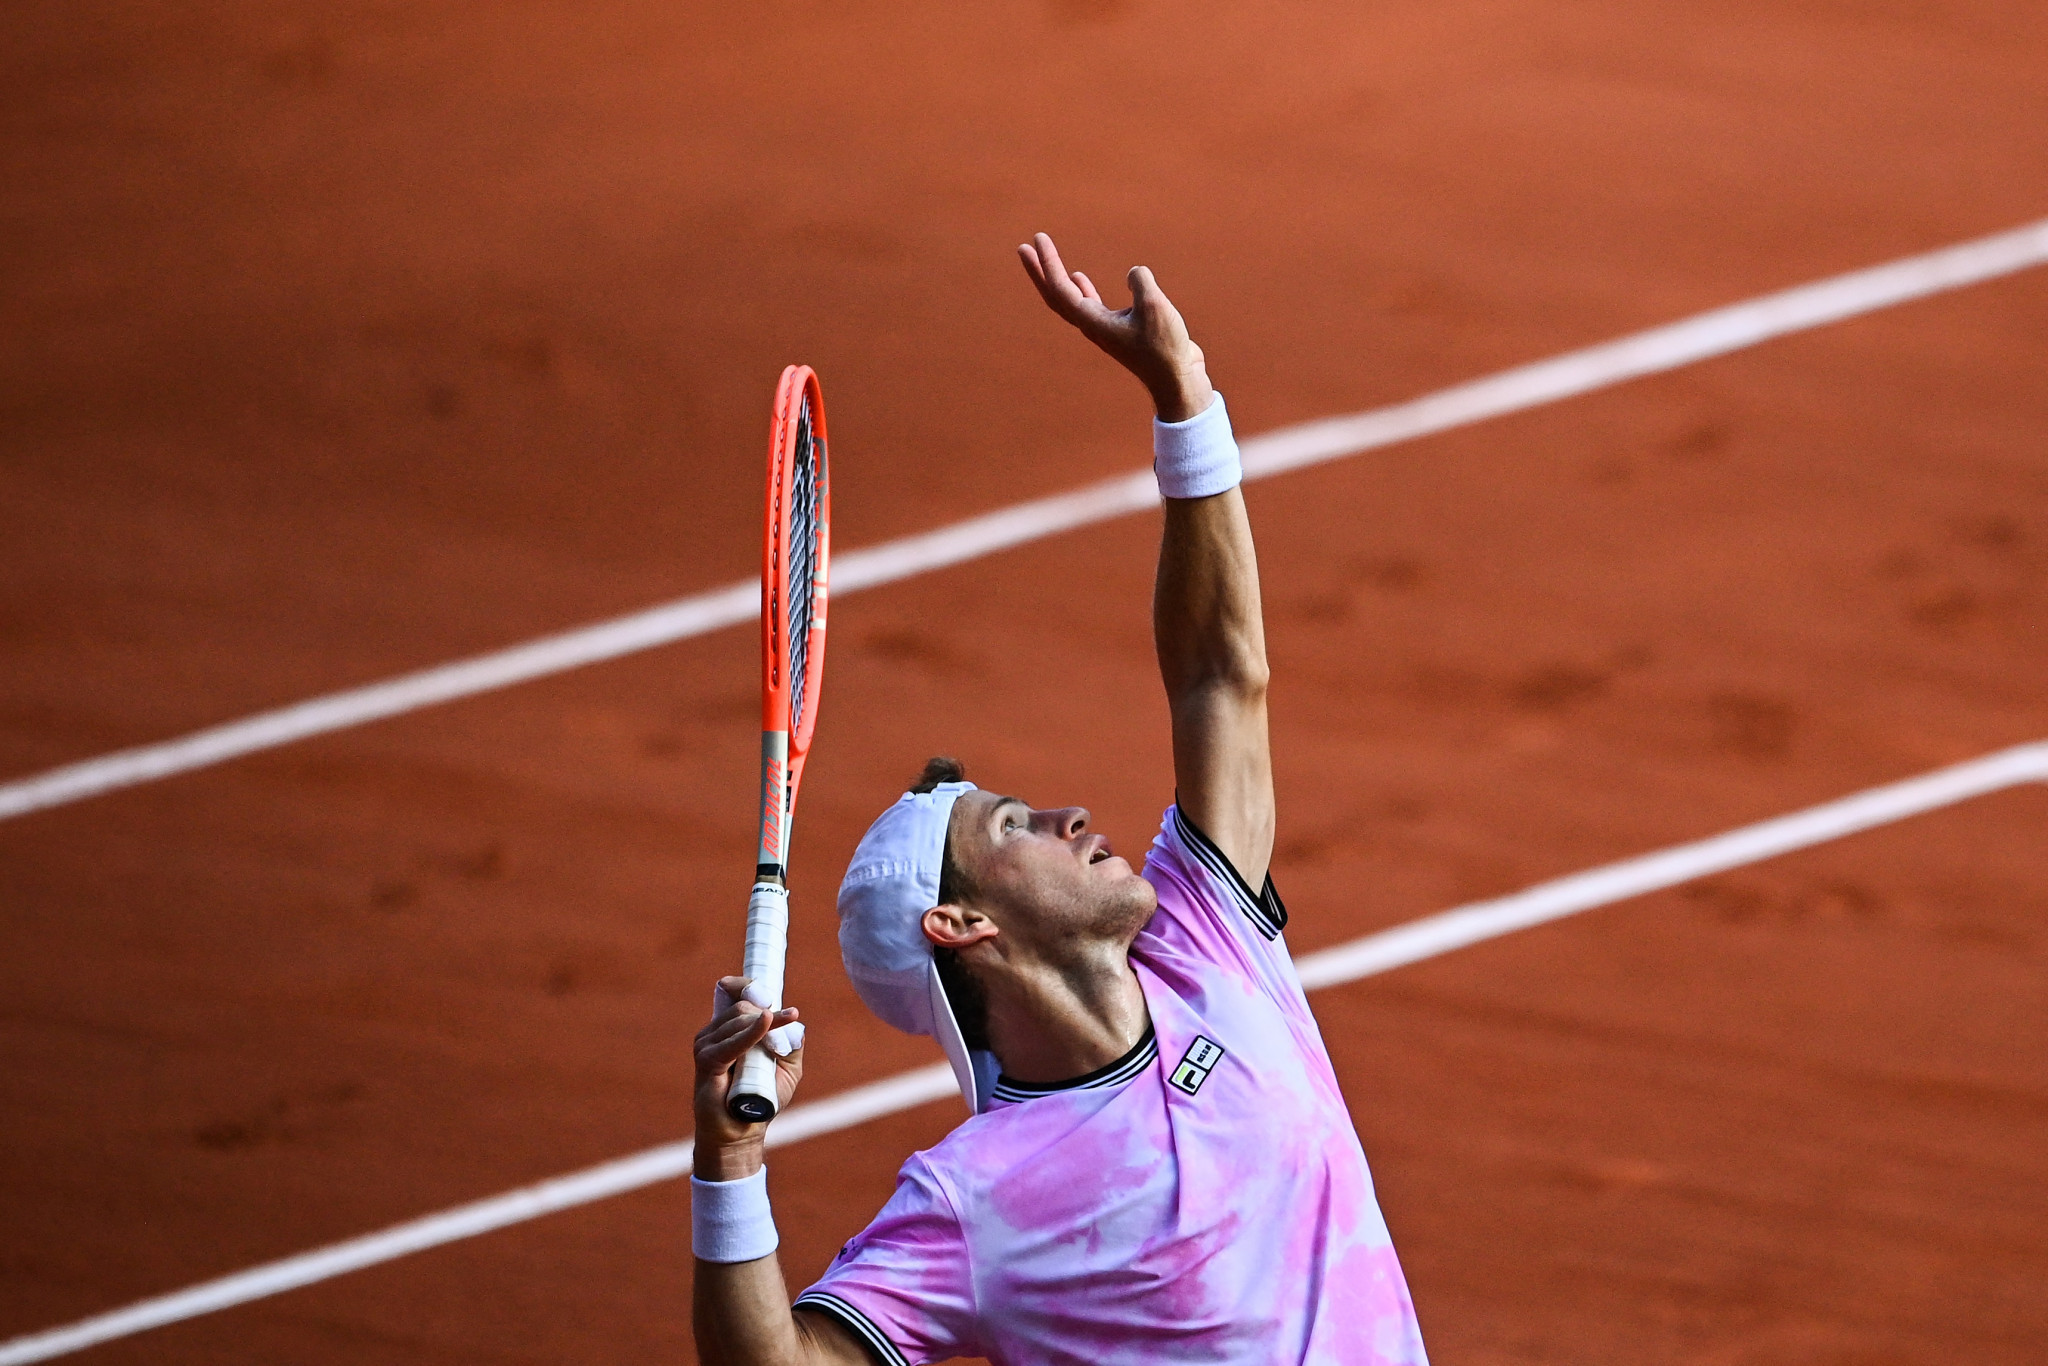 Diego Schwartzman of Argentina 6-3, 4-6, 6-4, 6-0 against Nadal ©Getty Images